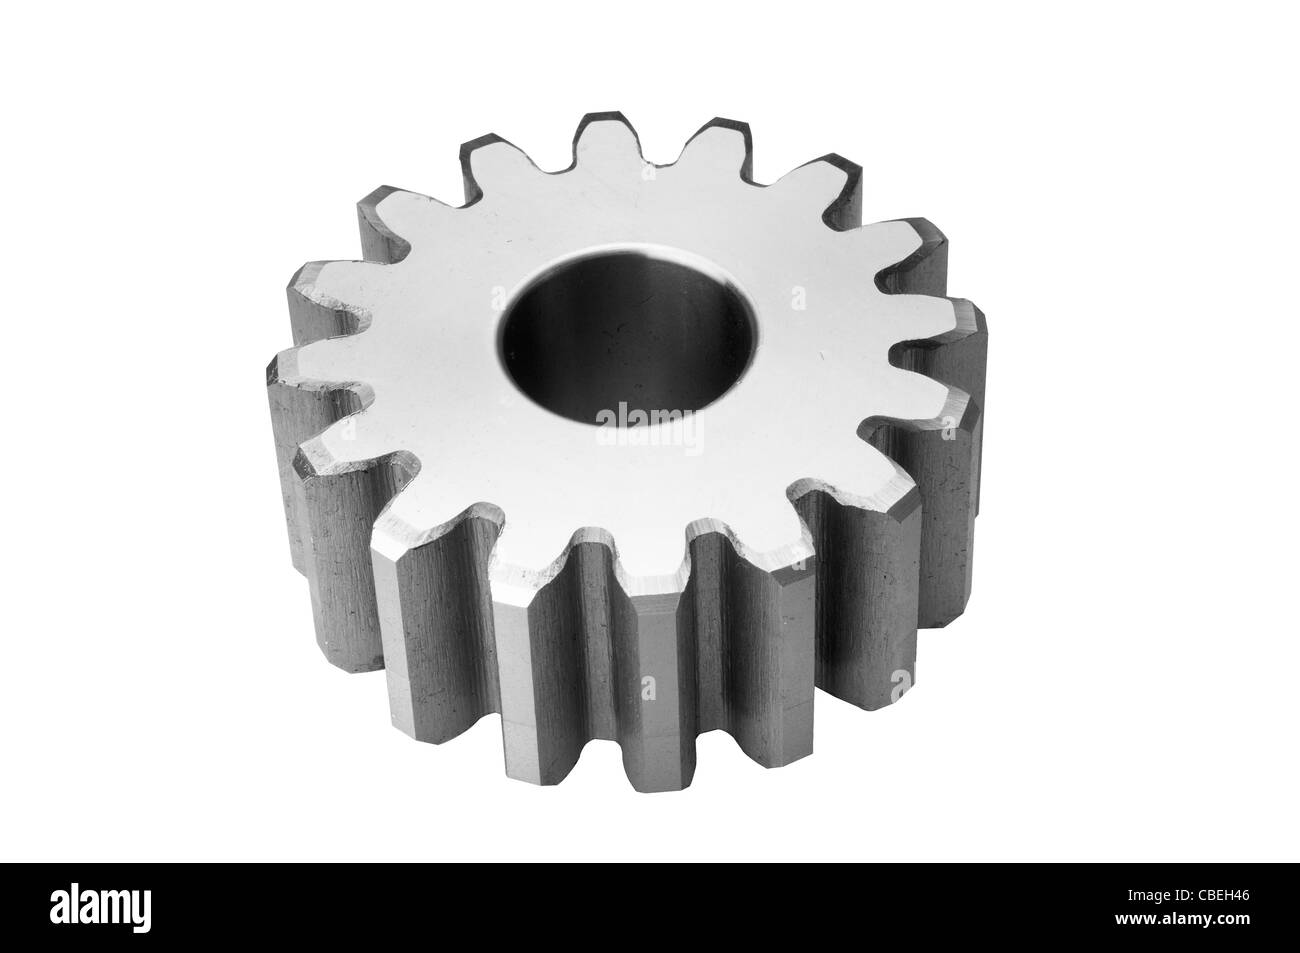 Konzept Kooperation Energie Motor engineering Baumaschinen Getriebe Gruppe Symbol Abbildung Bild Industrie iso Stockfoto